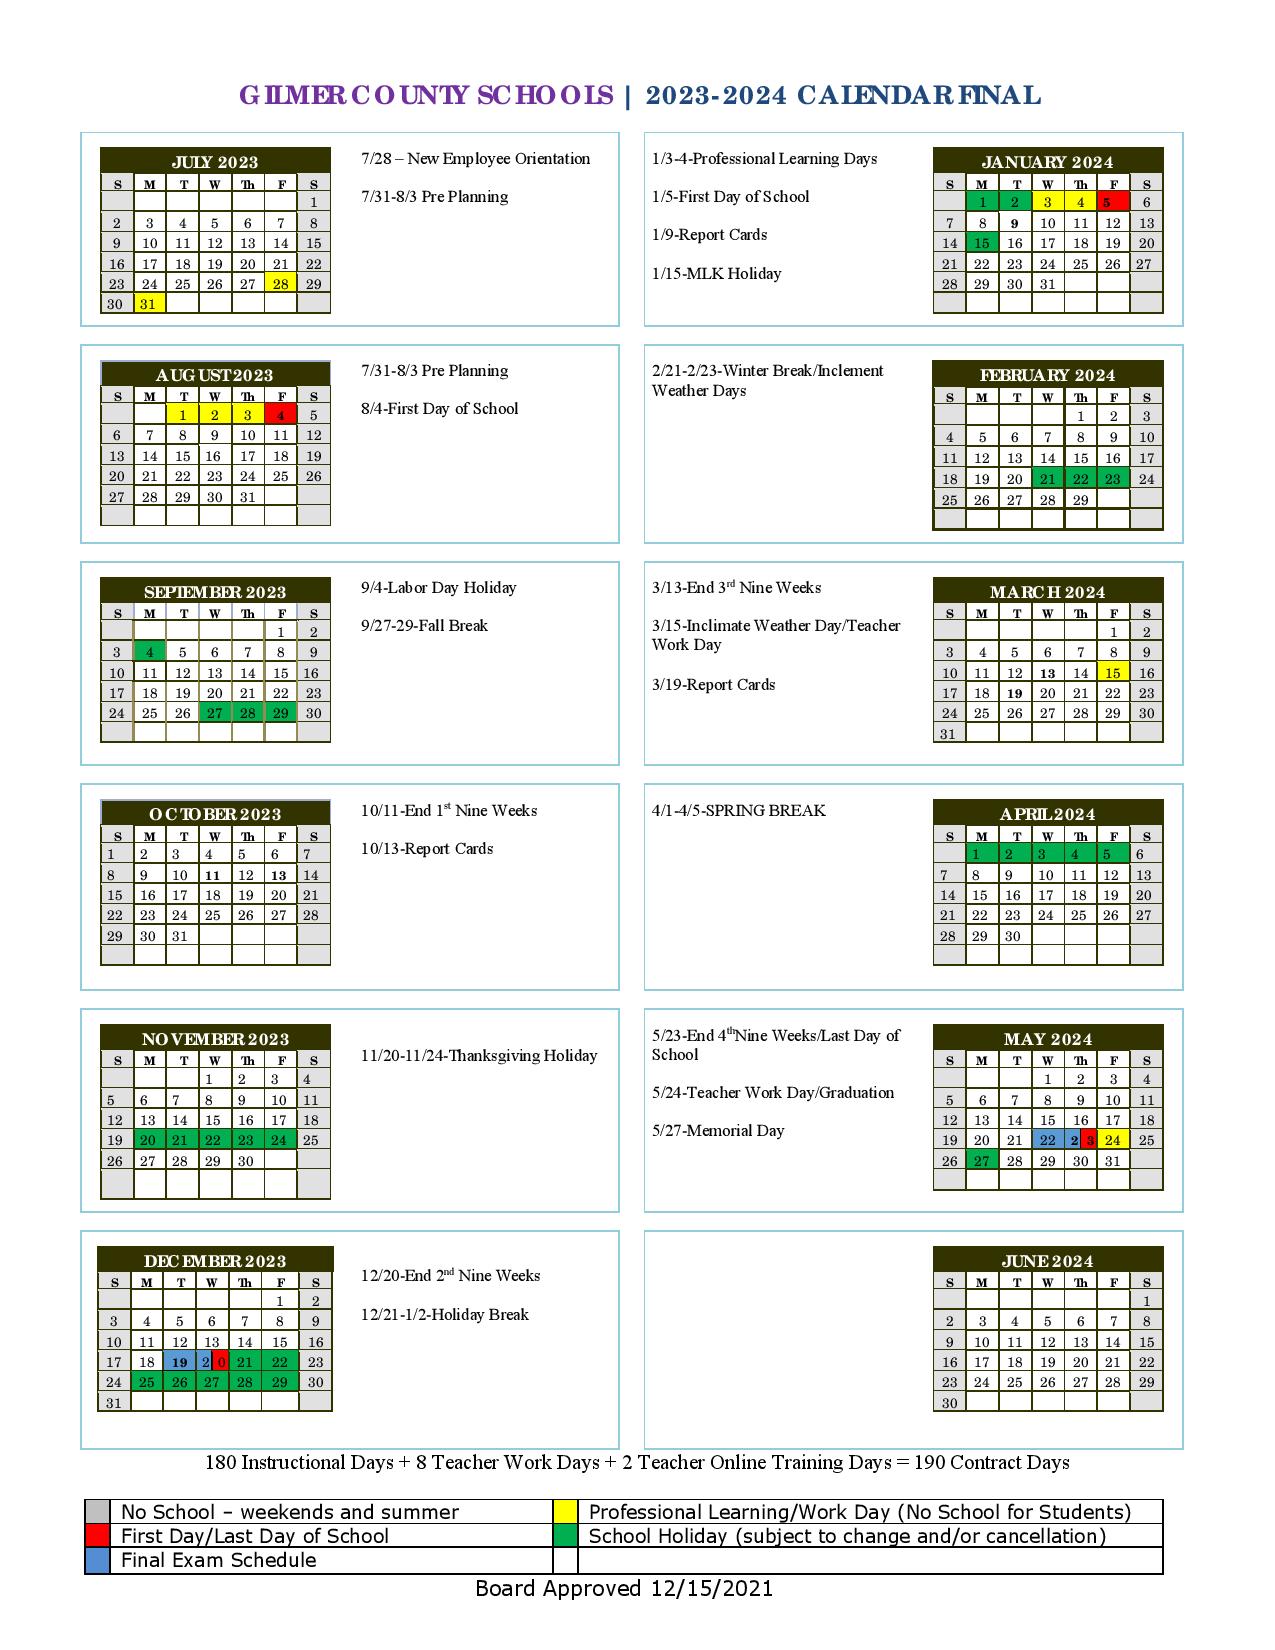 Gilmer County Charter Schools Calendar 2023 2024 In PDF School Calendar Info